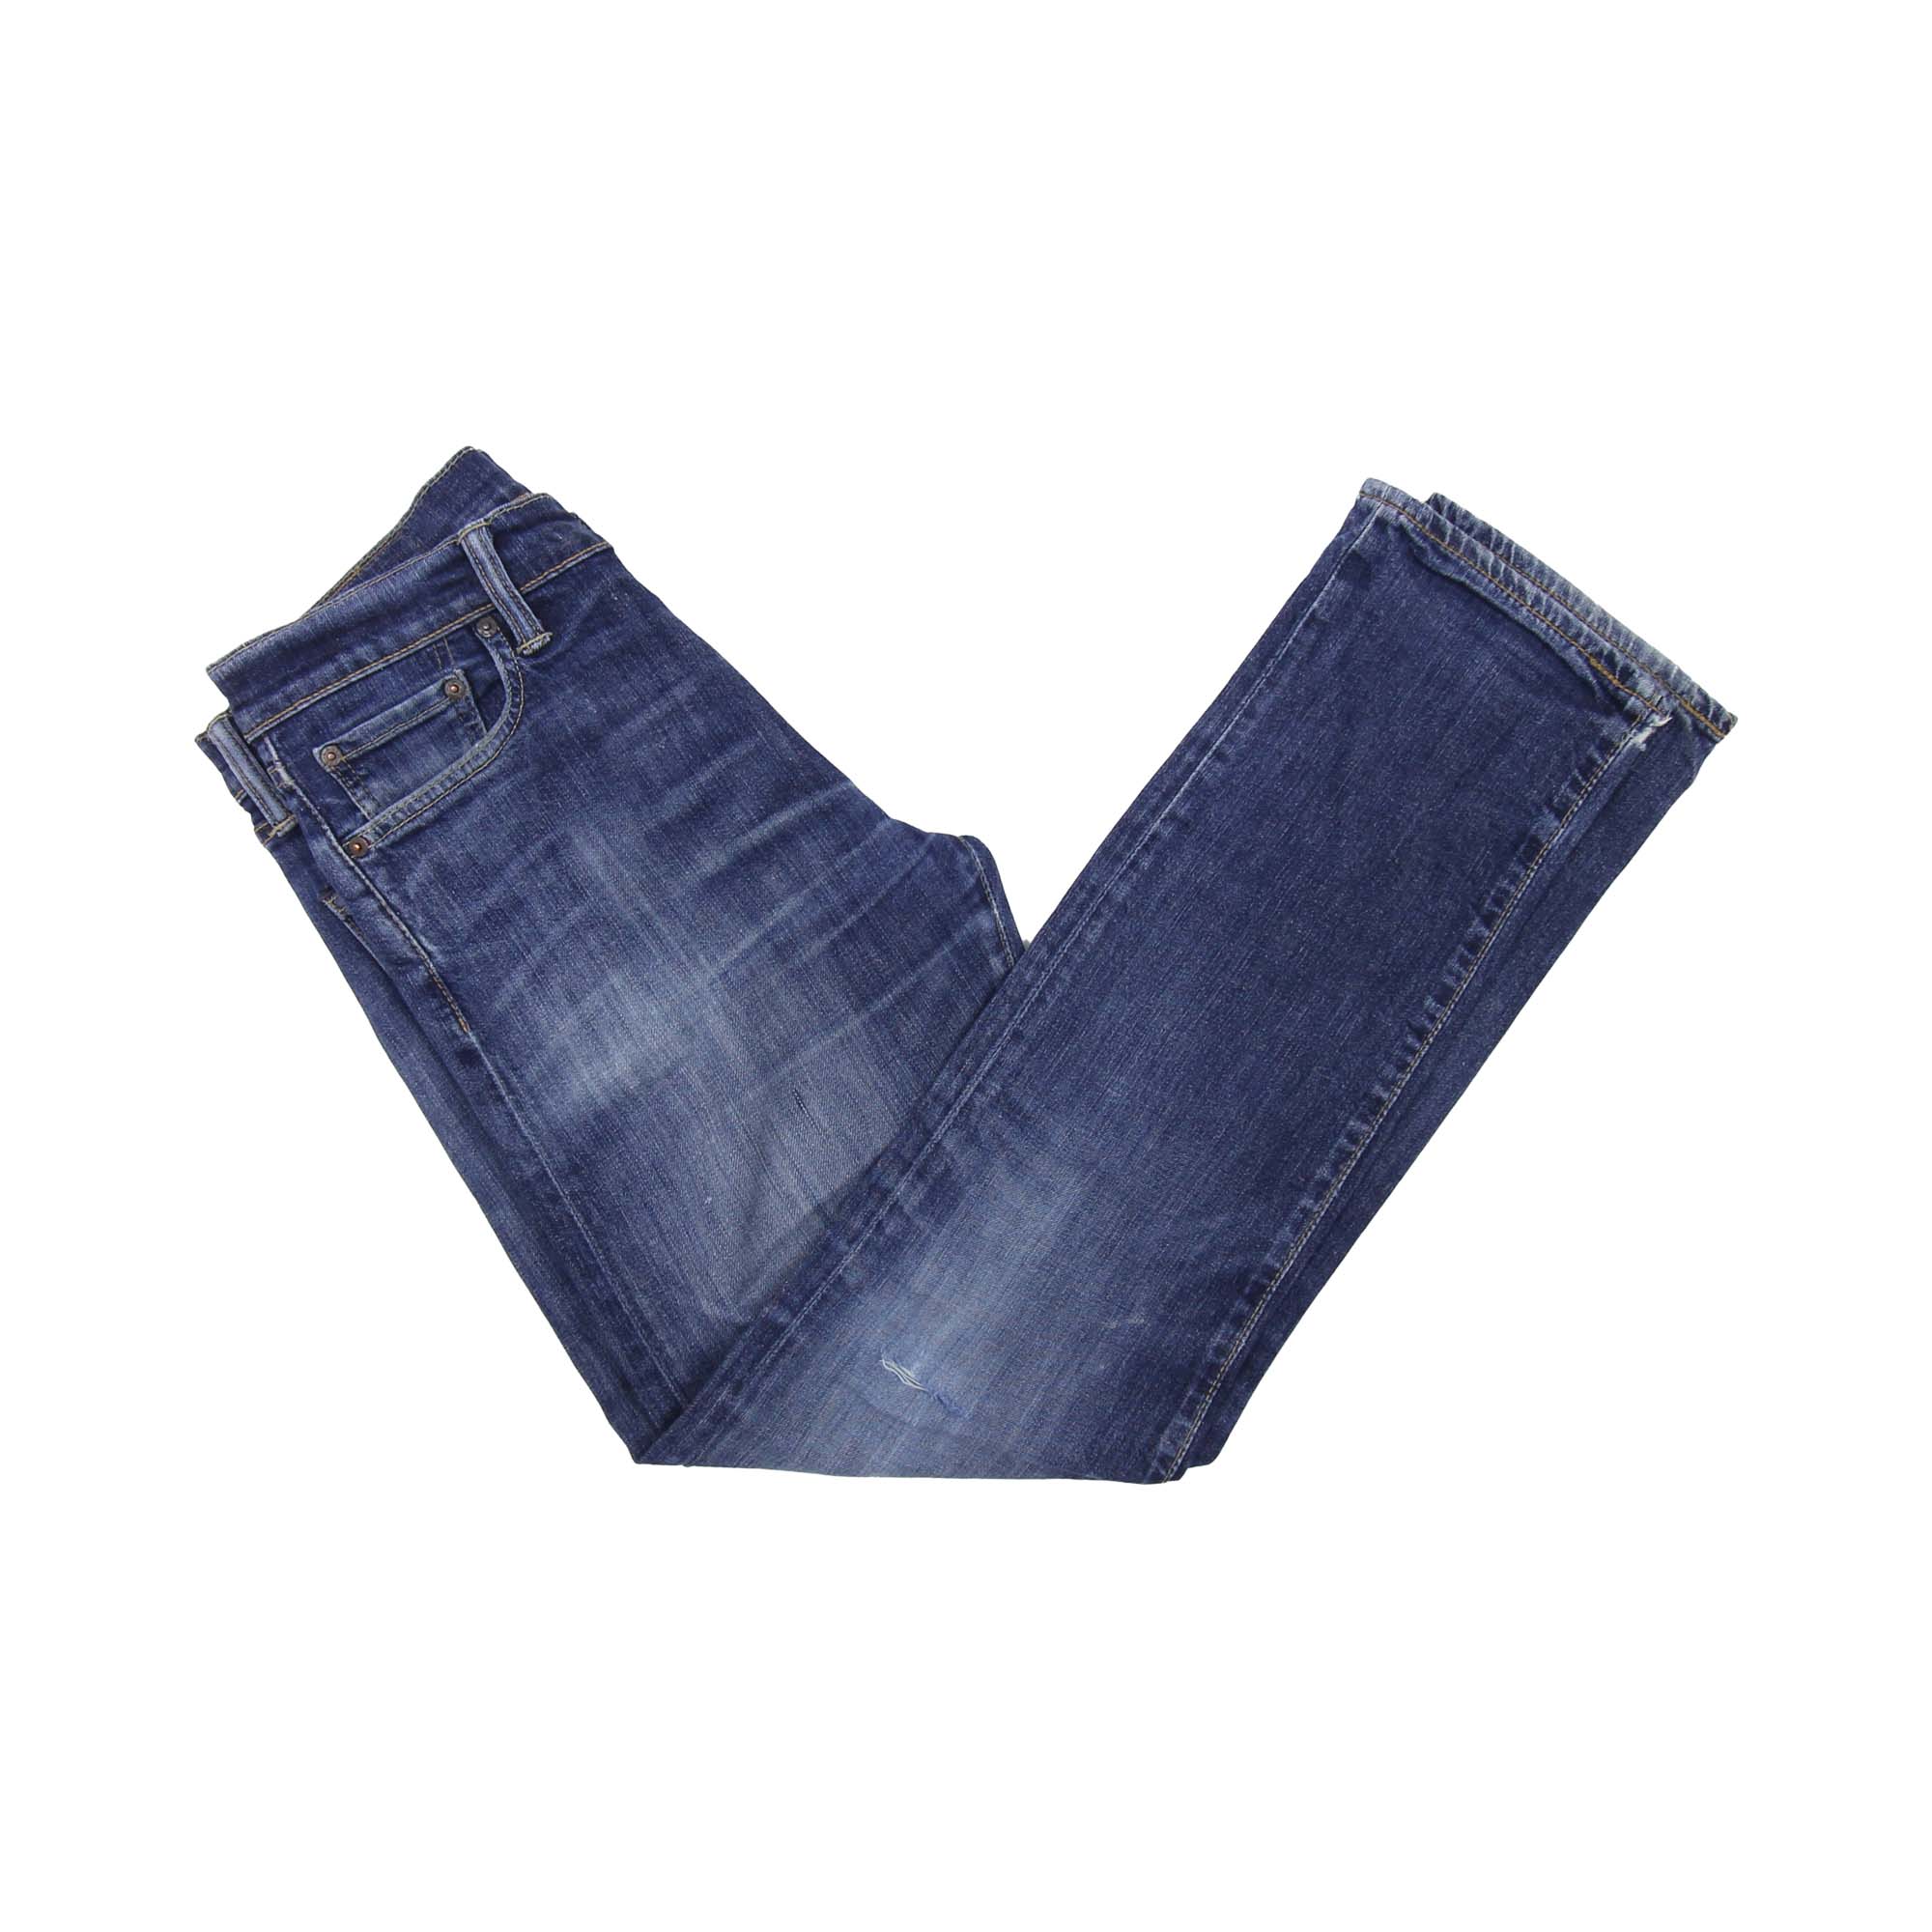 Levi's 504 Jeans  -   W31 L32